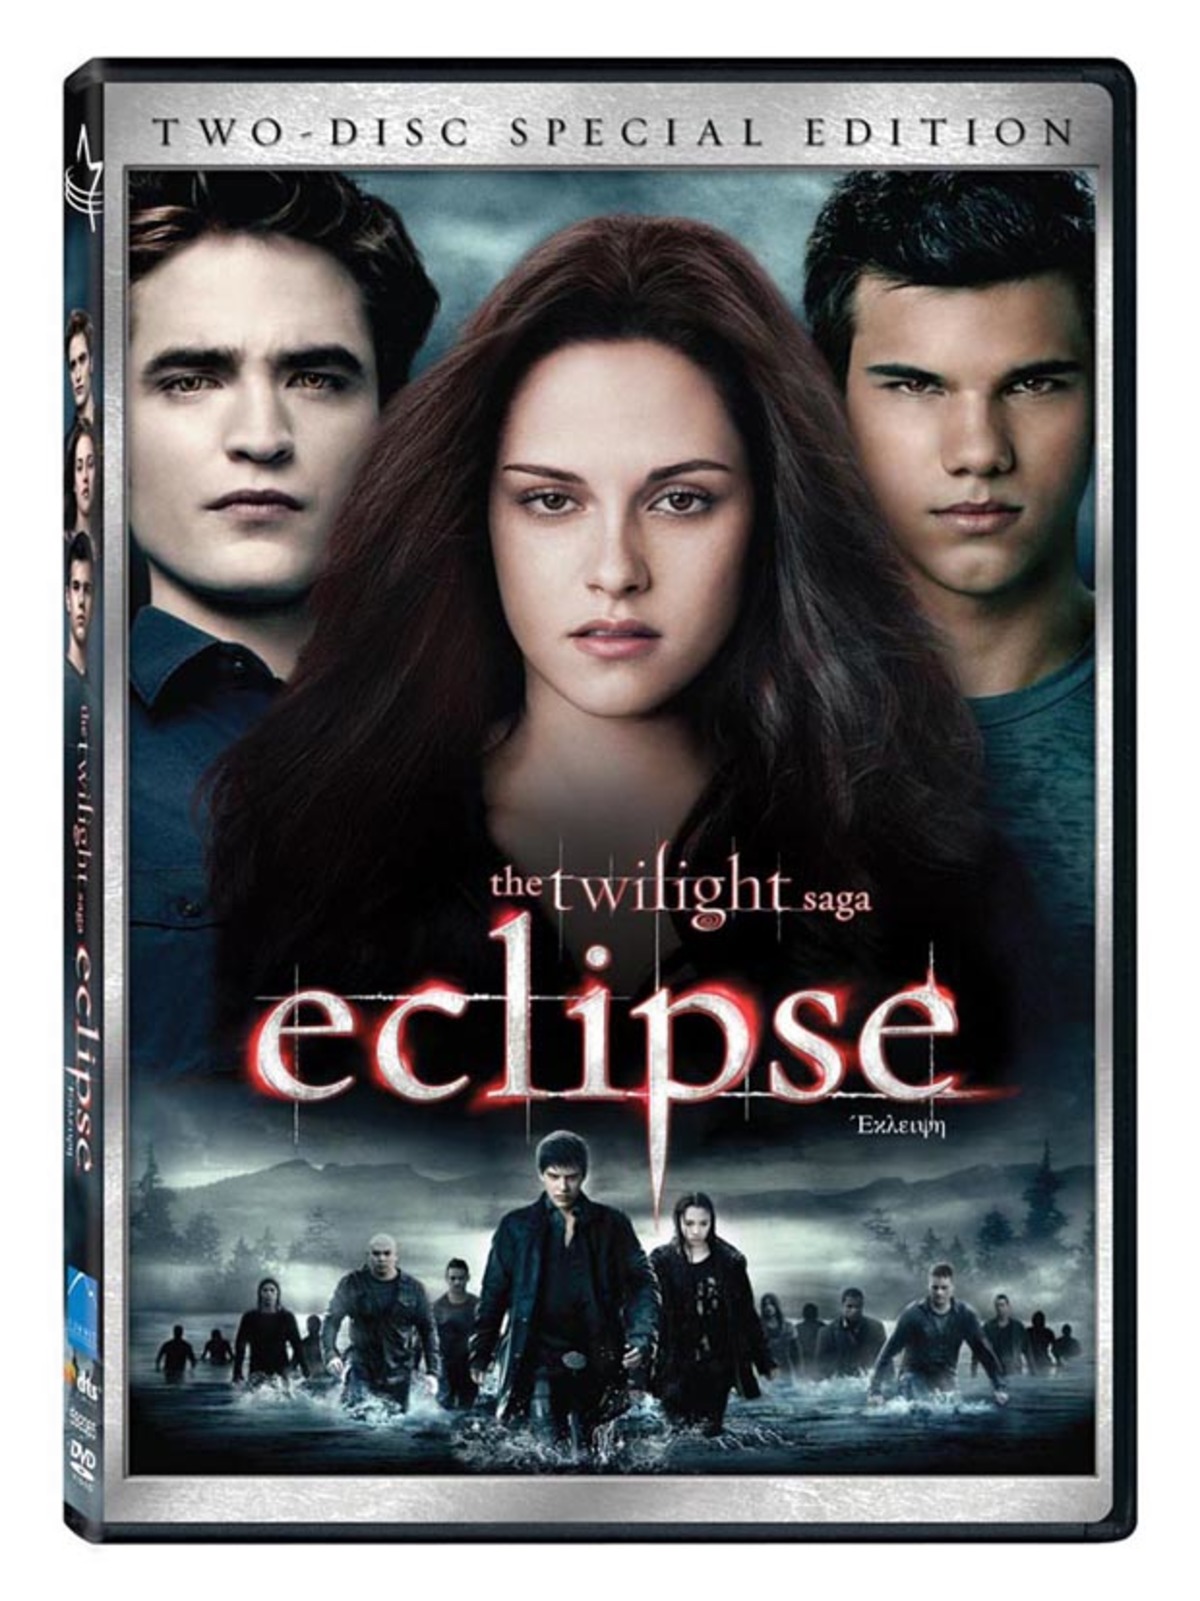 Twilight Saga: Εclipse